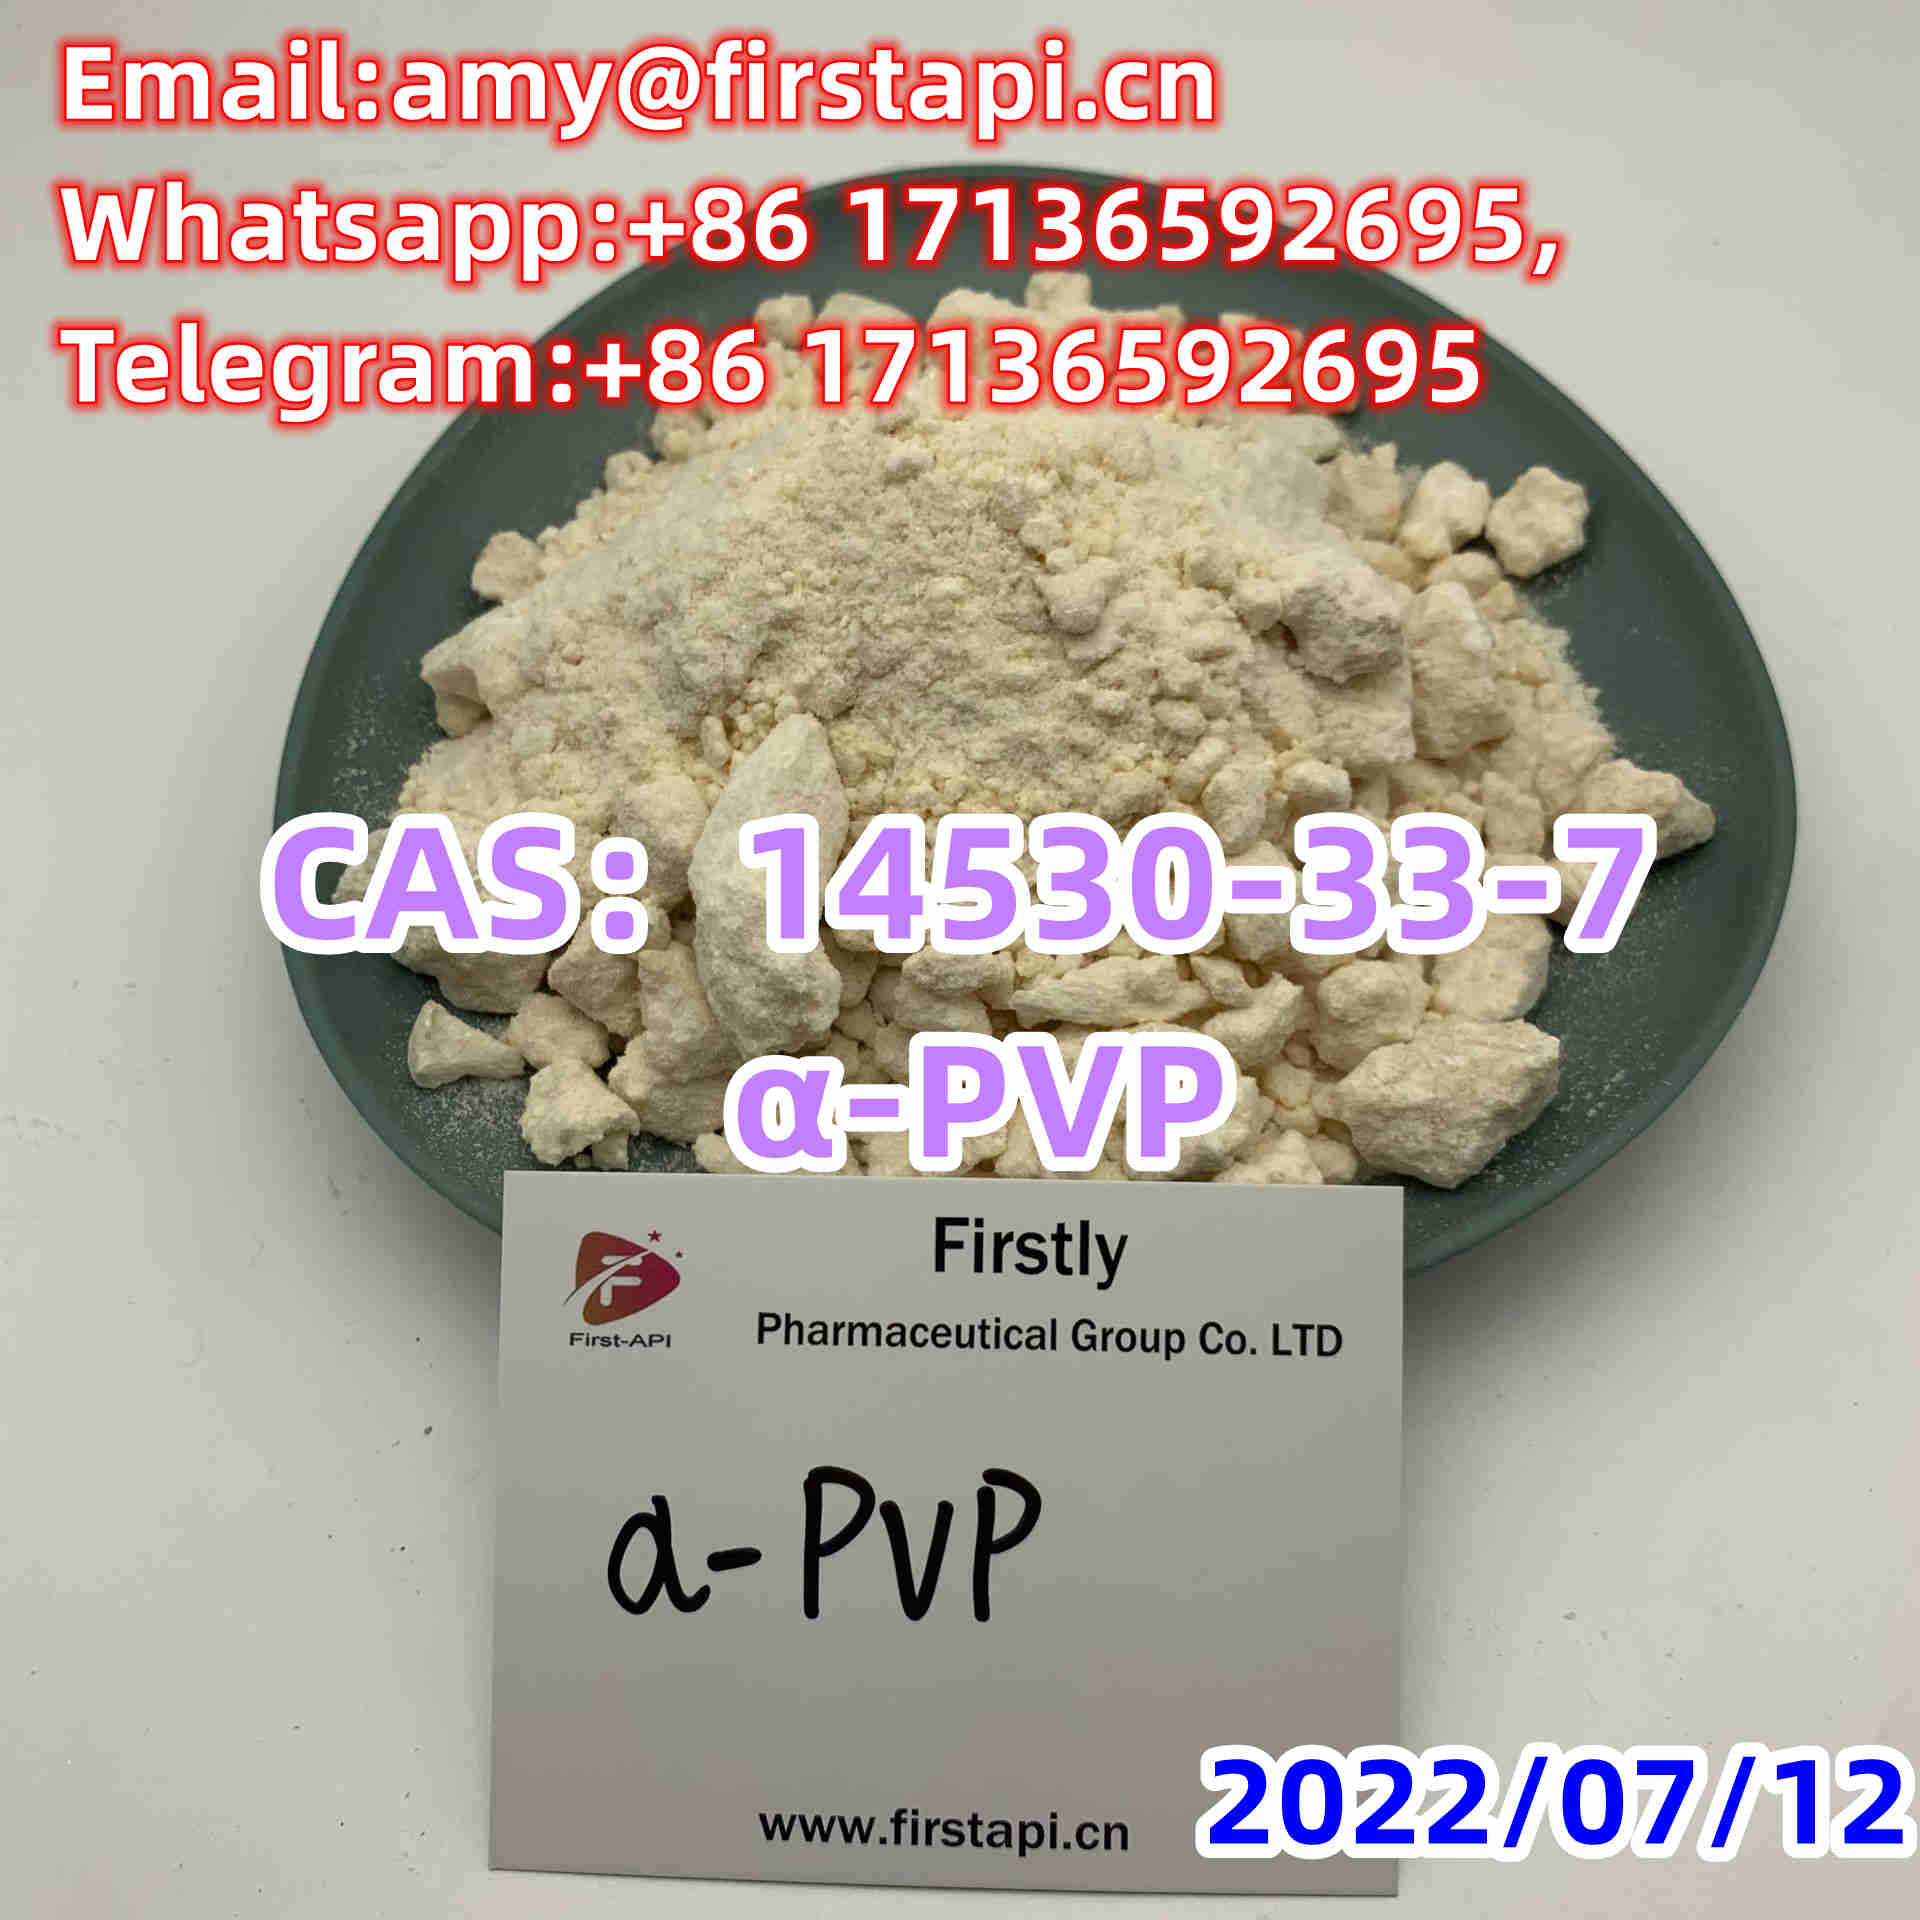 Whatsapp:+86 17136592695,CAS No.:14530-33-7,Chemical Name:DesMethyl Pyrovalerone,salable - photo